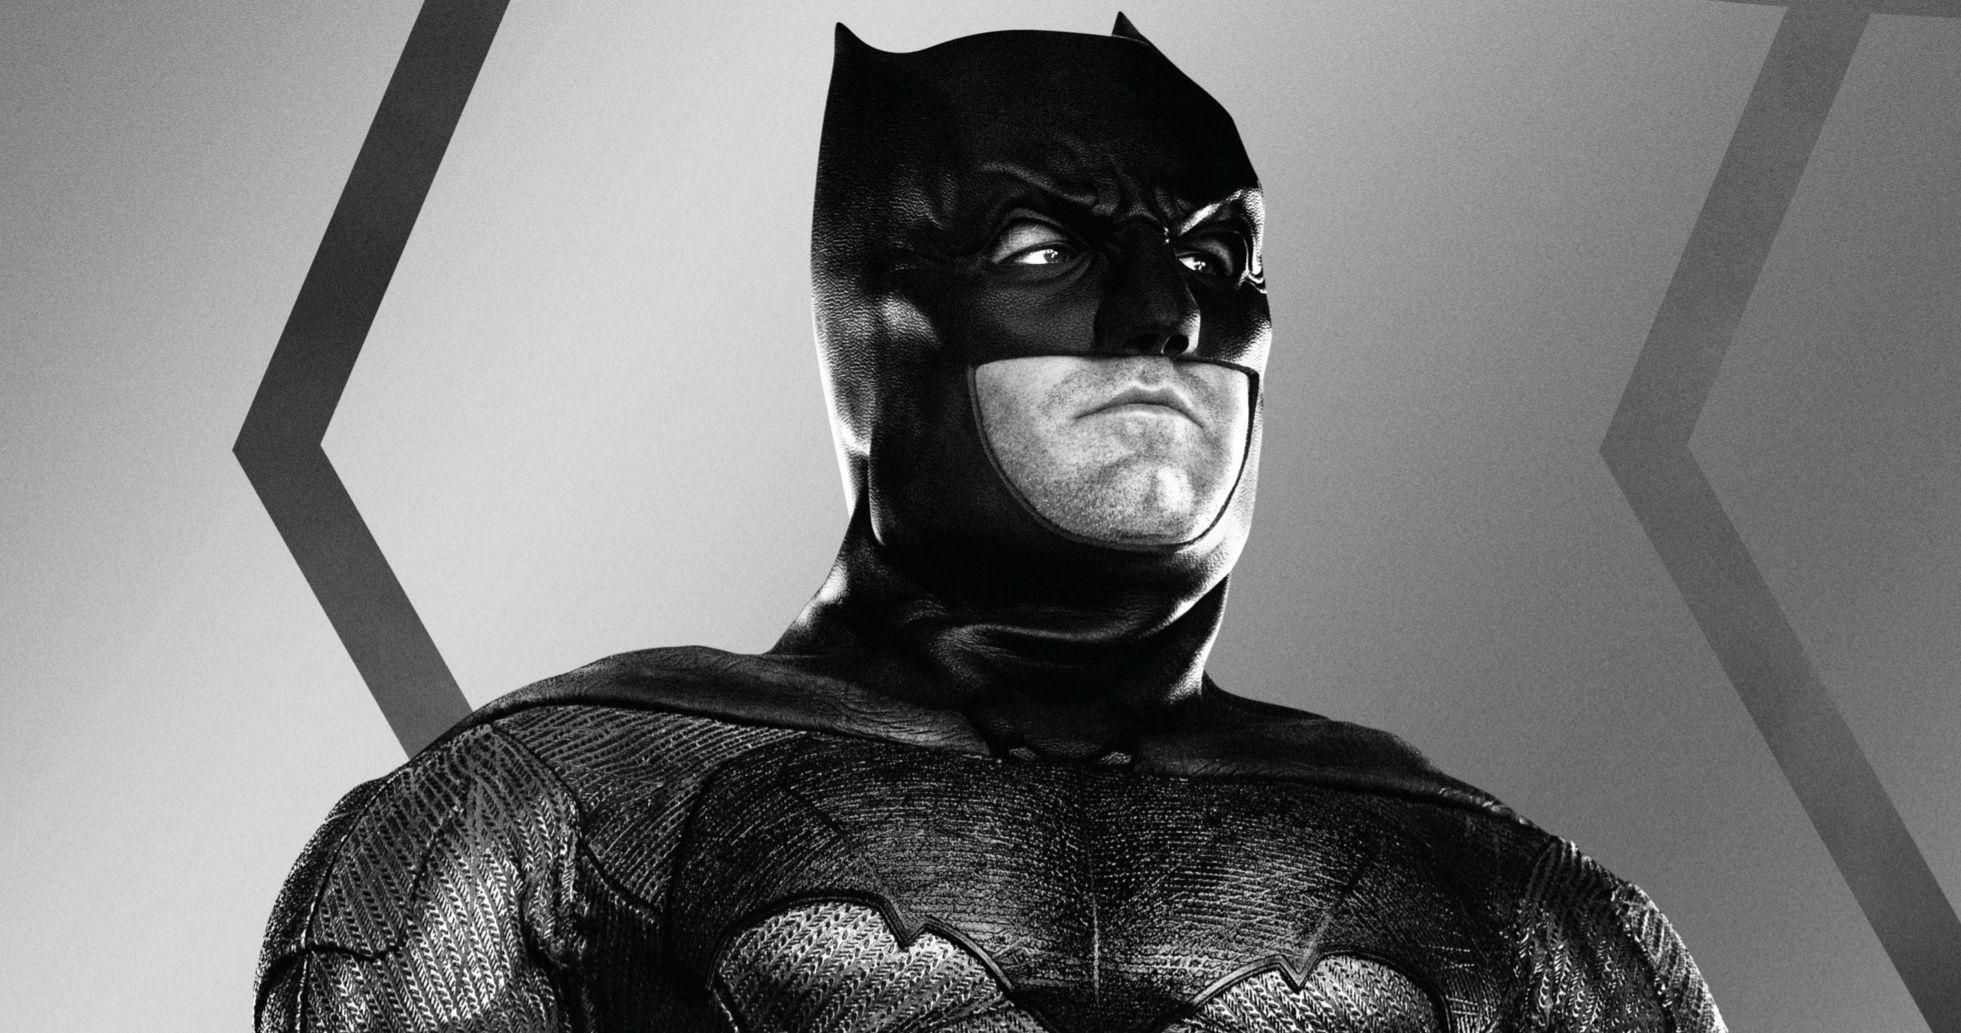 Batman Rises in New Snyder Cut Teaser &amp; Poster Featuring Ben Affleck